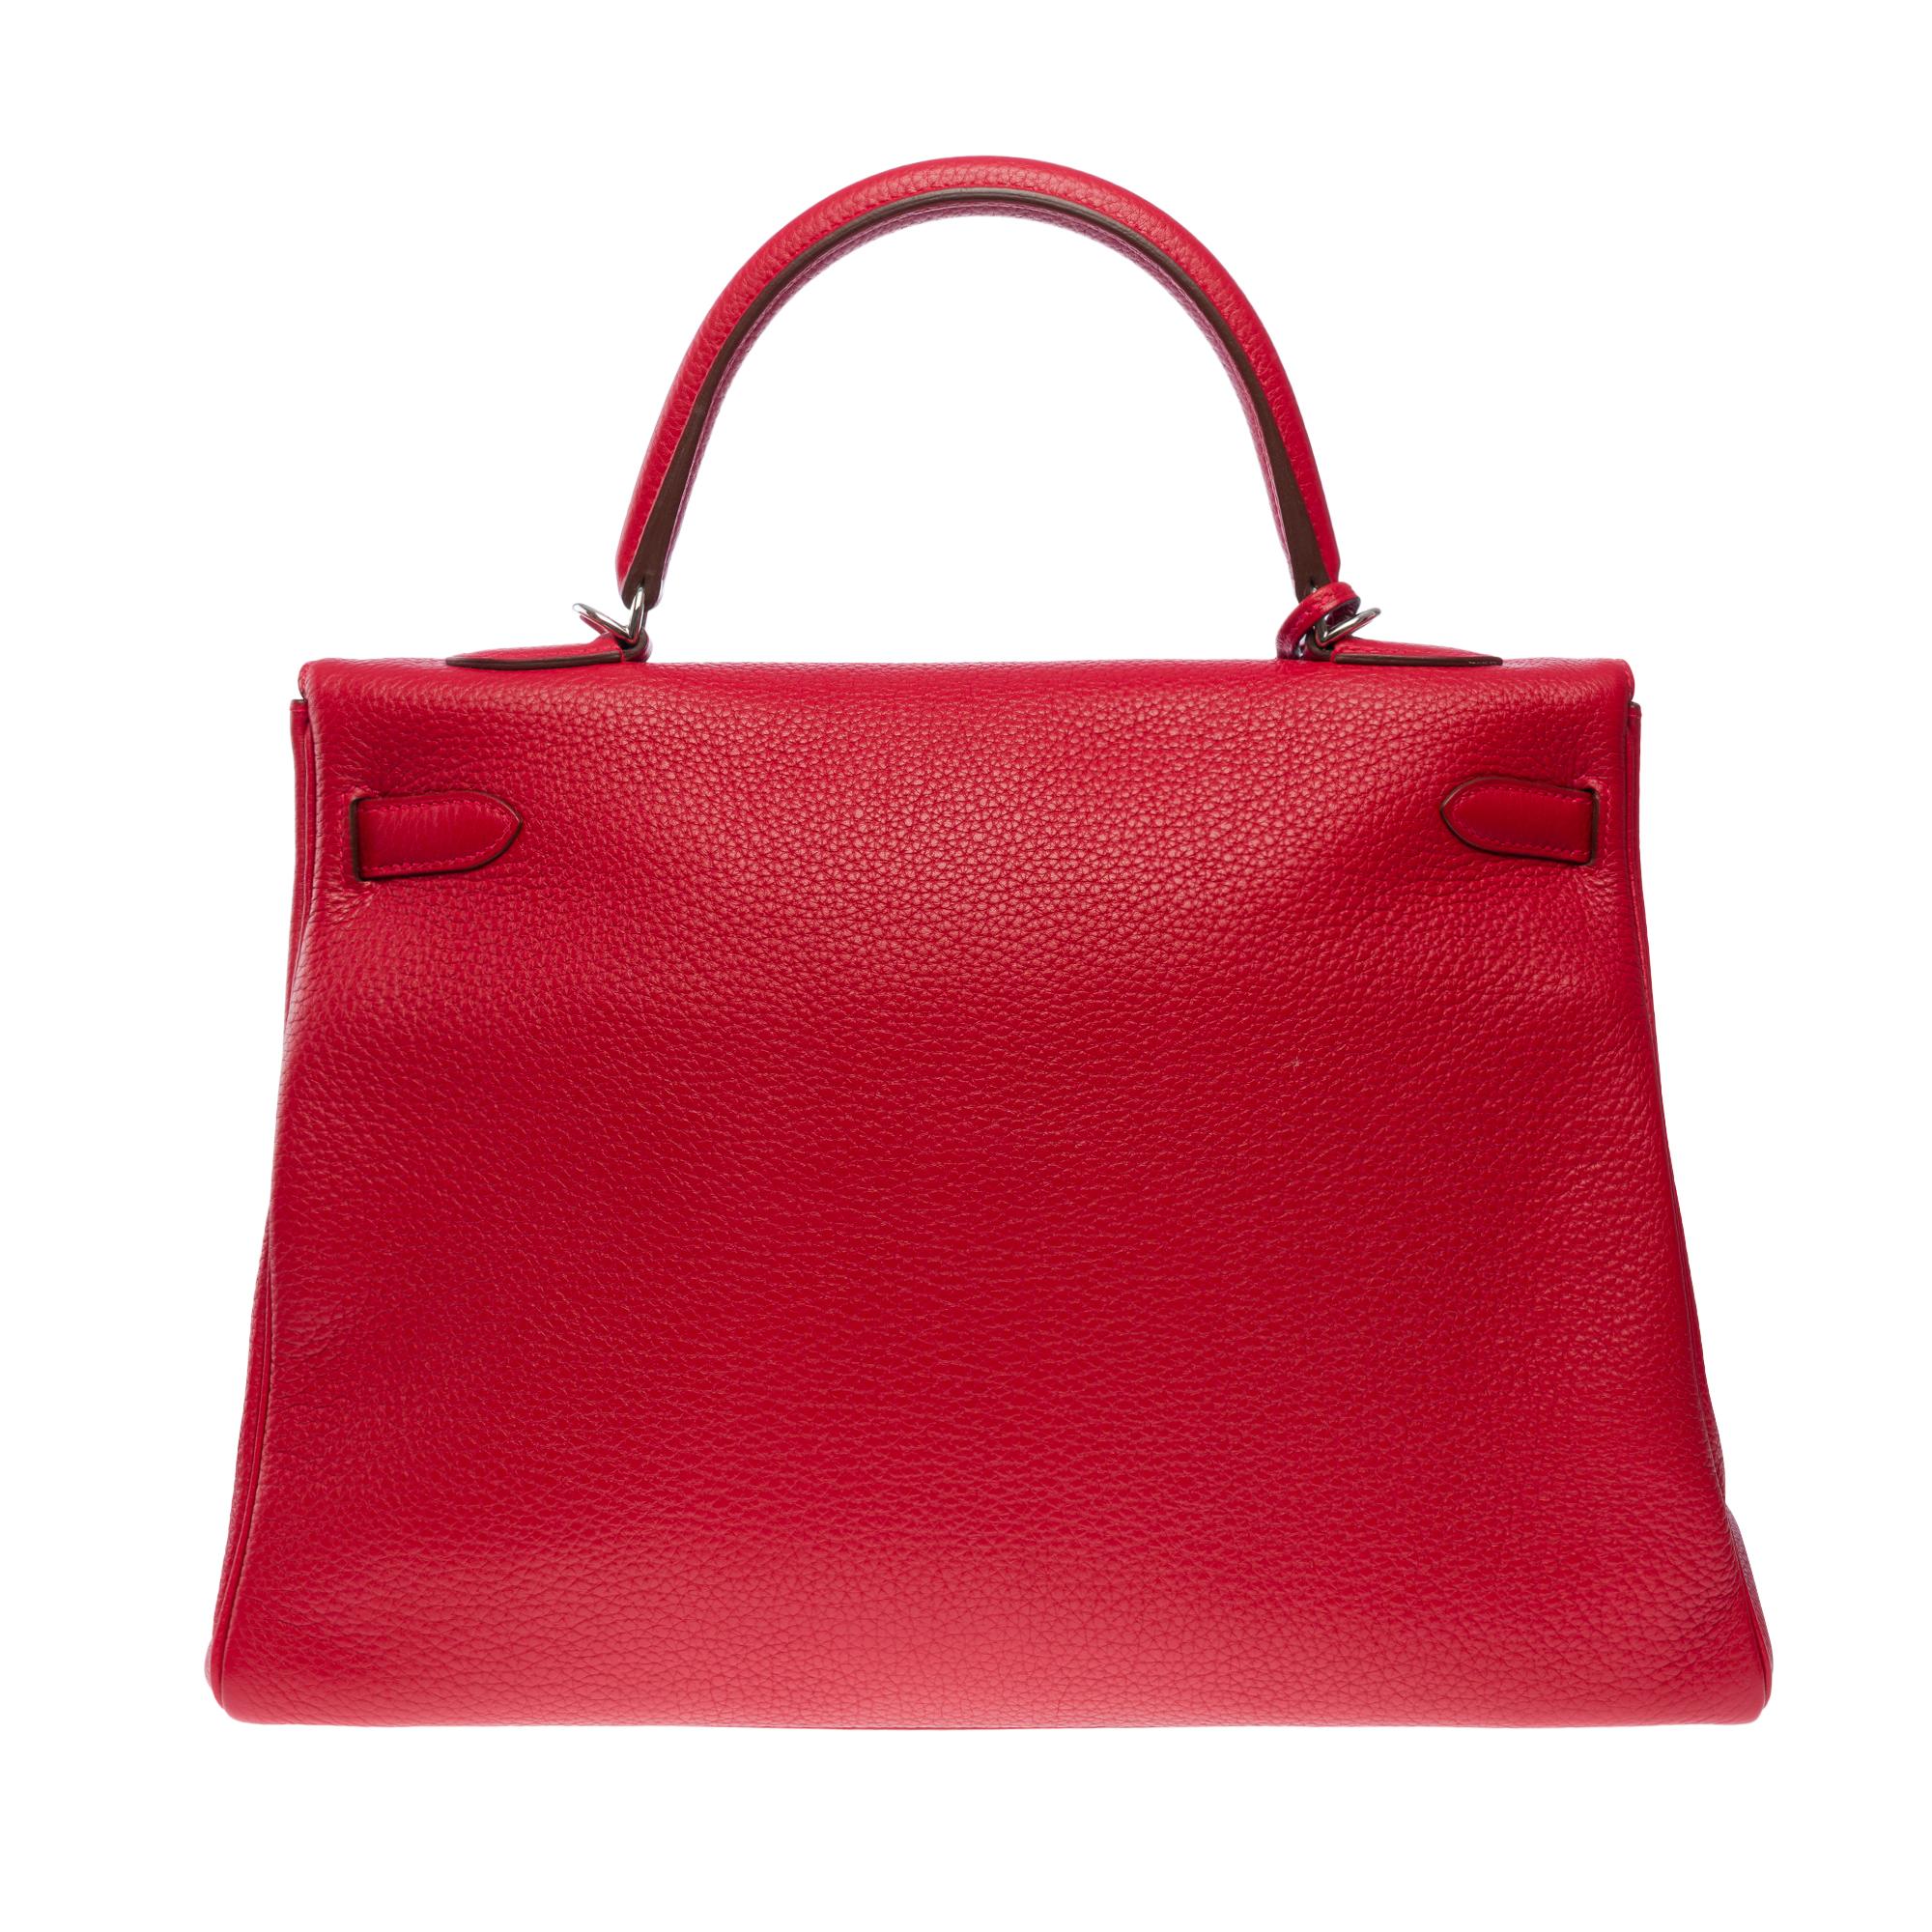 Hermès Kelly 35 retourne handbag strap in Red Taurillon Clemence leather, SHW 1